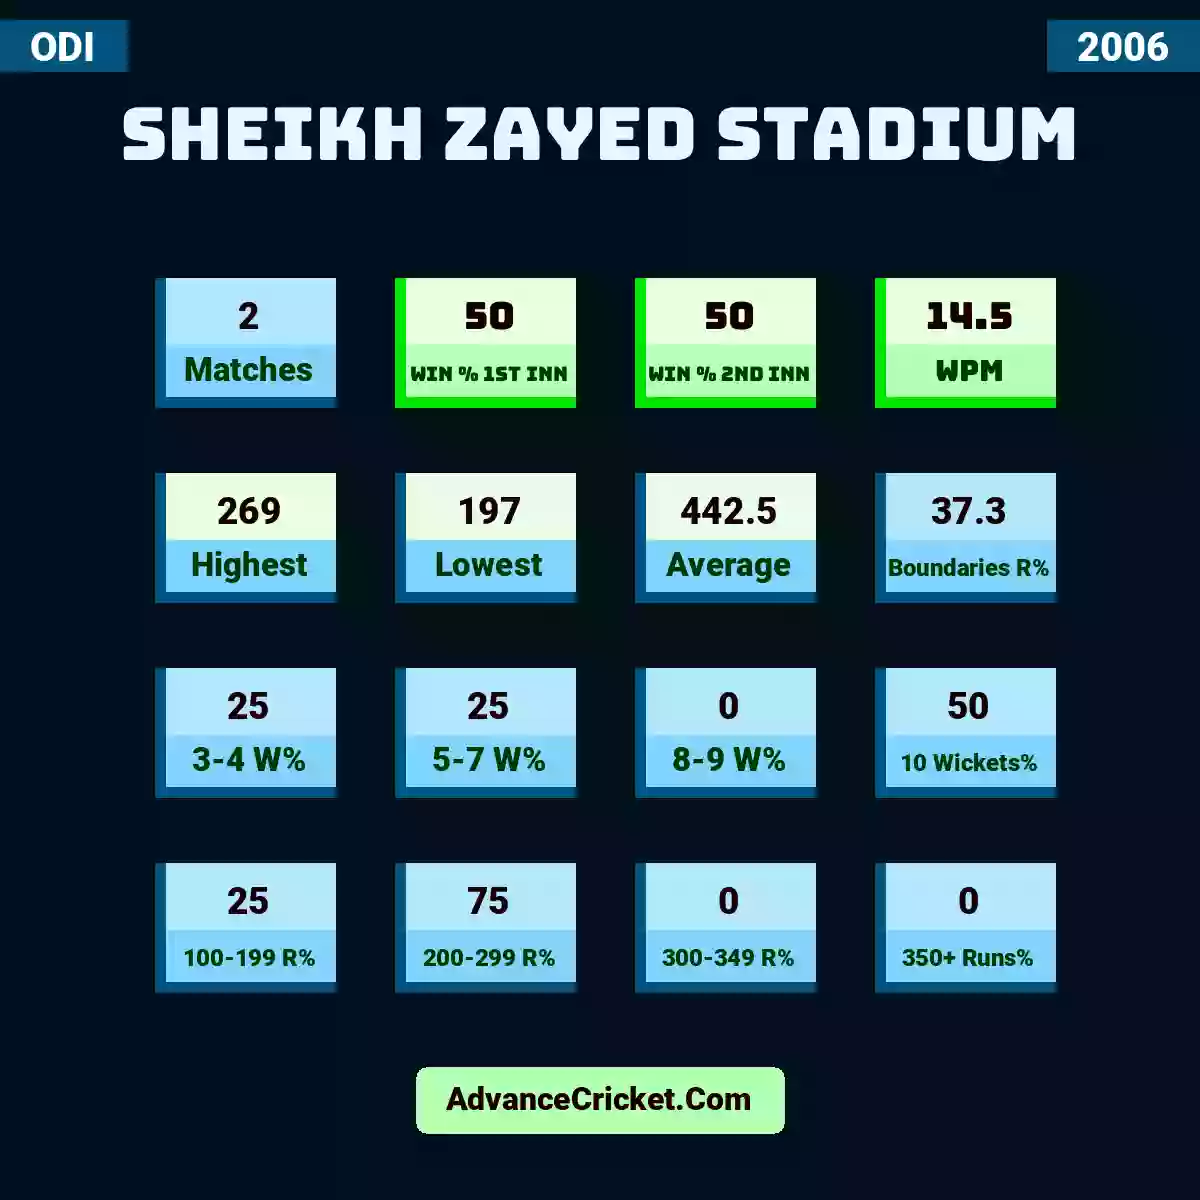 Image showing Sheikh Zayed Stadium with Matches: 2, Win % 1st Inn: 50, Win % 2nd Inn: 50, WPM: 14.5, Highest: 269, Lowest: 197, Average: 442.5, Boundaries R%: 37.3, 3-4 W%: 25, 5-7 W%: 25, 8-9 W%: 0, 10 Wickets%: 50, 100-199 R%: 25, 200-299 R%: 75, 300-349 R%: 0, 350+ Runs%: 0.